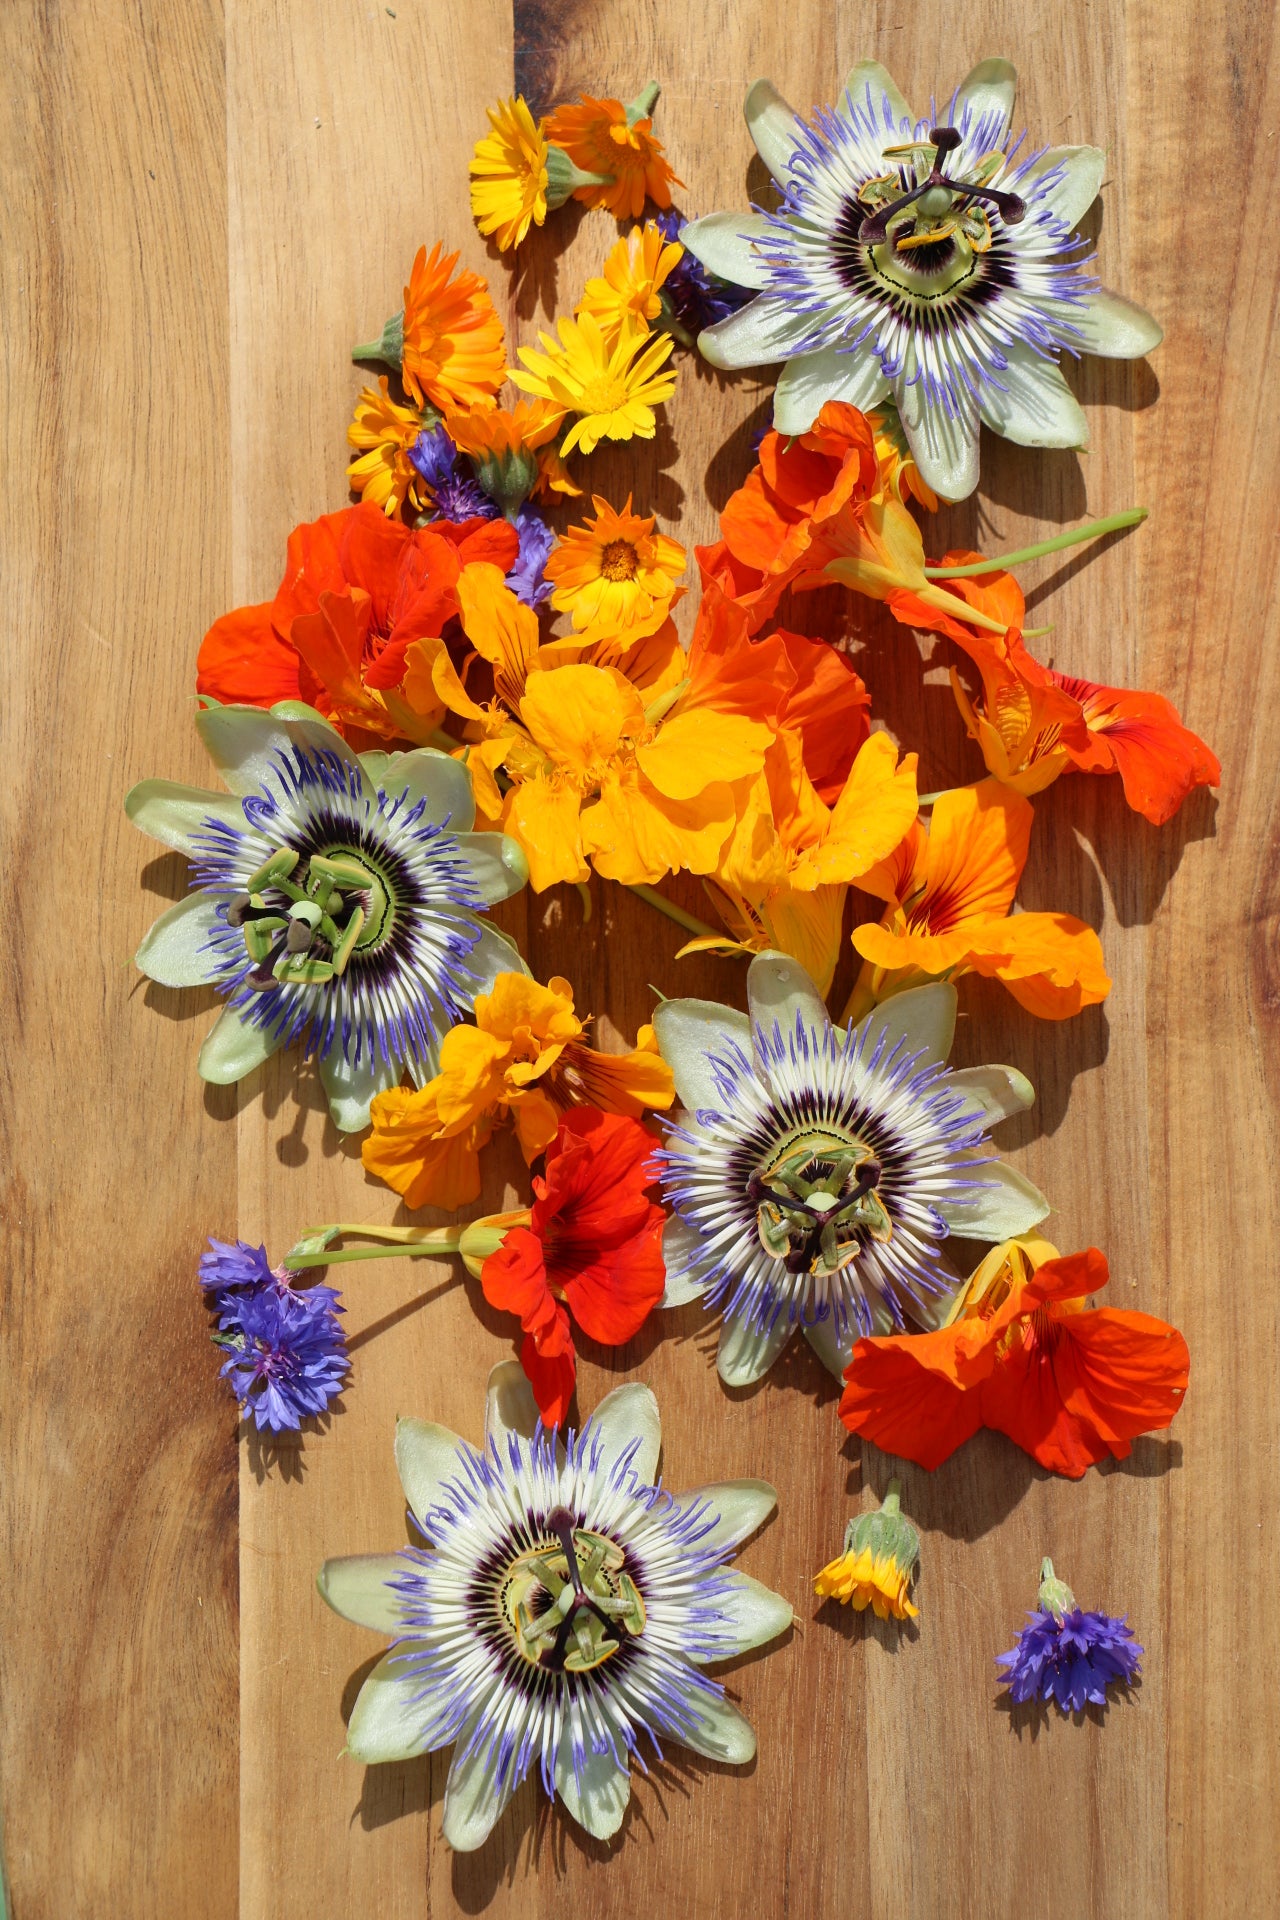 Tincture of flowers, passionflower, calendula, nasturtium, agastache and cornflower